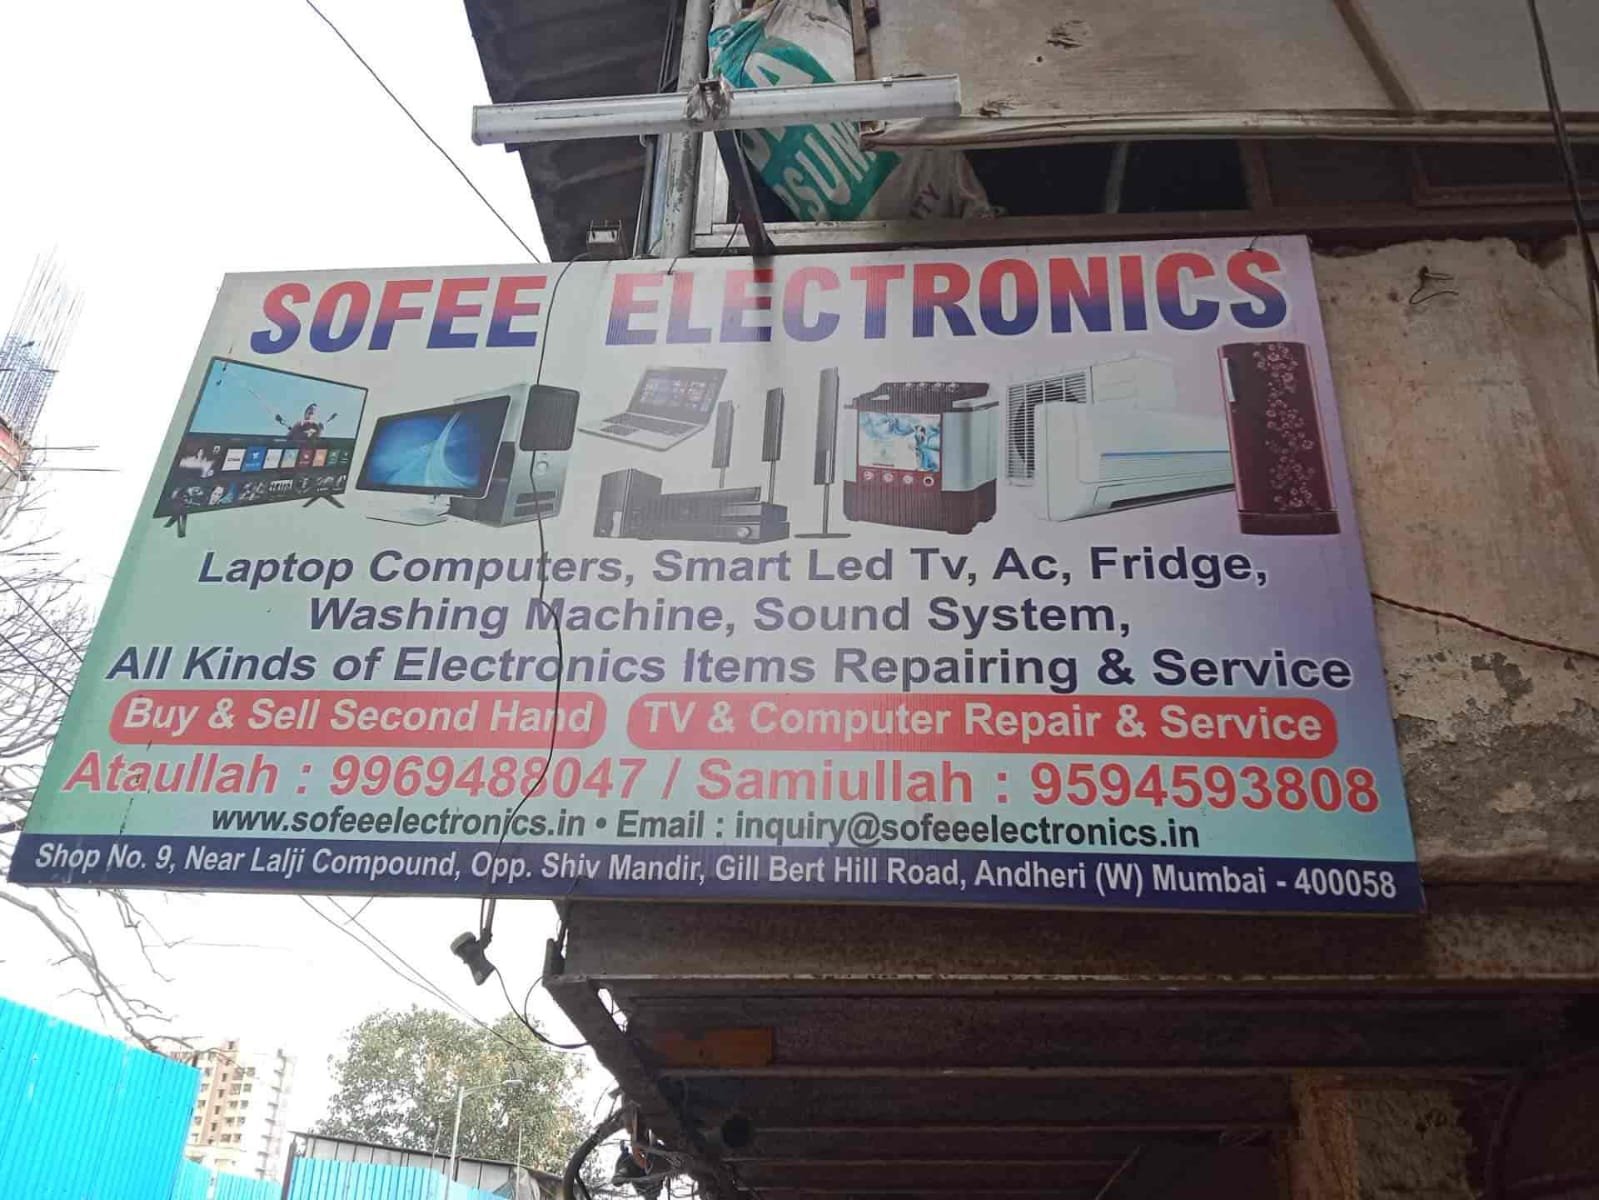 Sofee Electronics